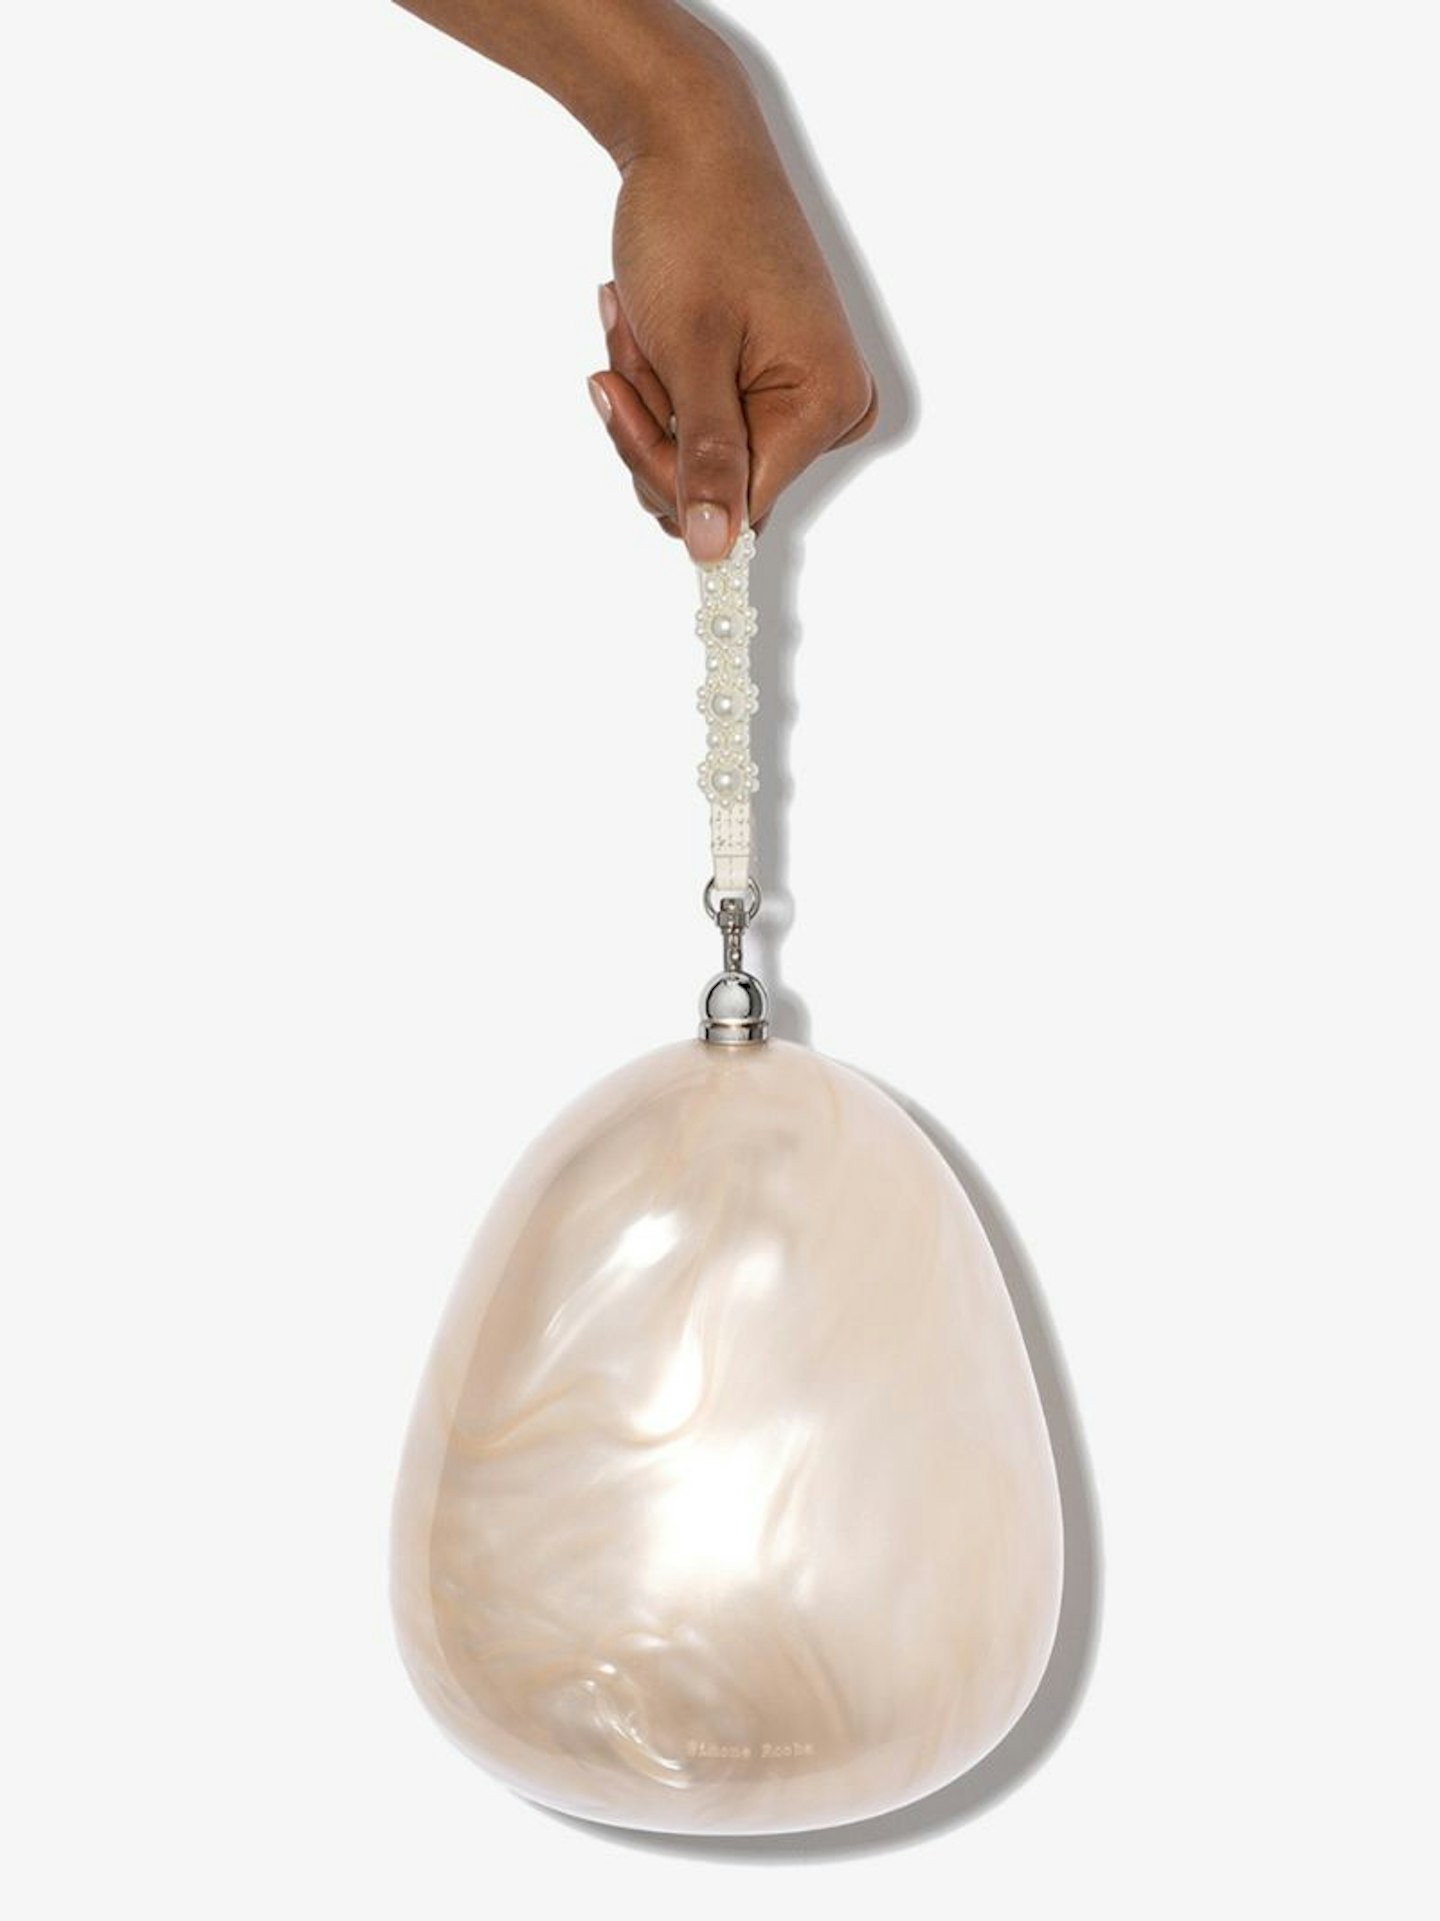 Simone Rocha, Neutral Perspex Pearl Egg Clutch Bag, £550 at Browns